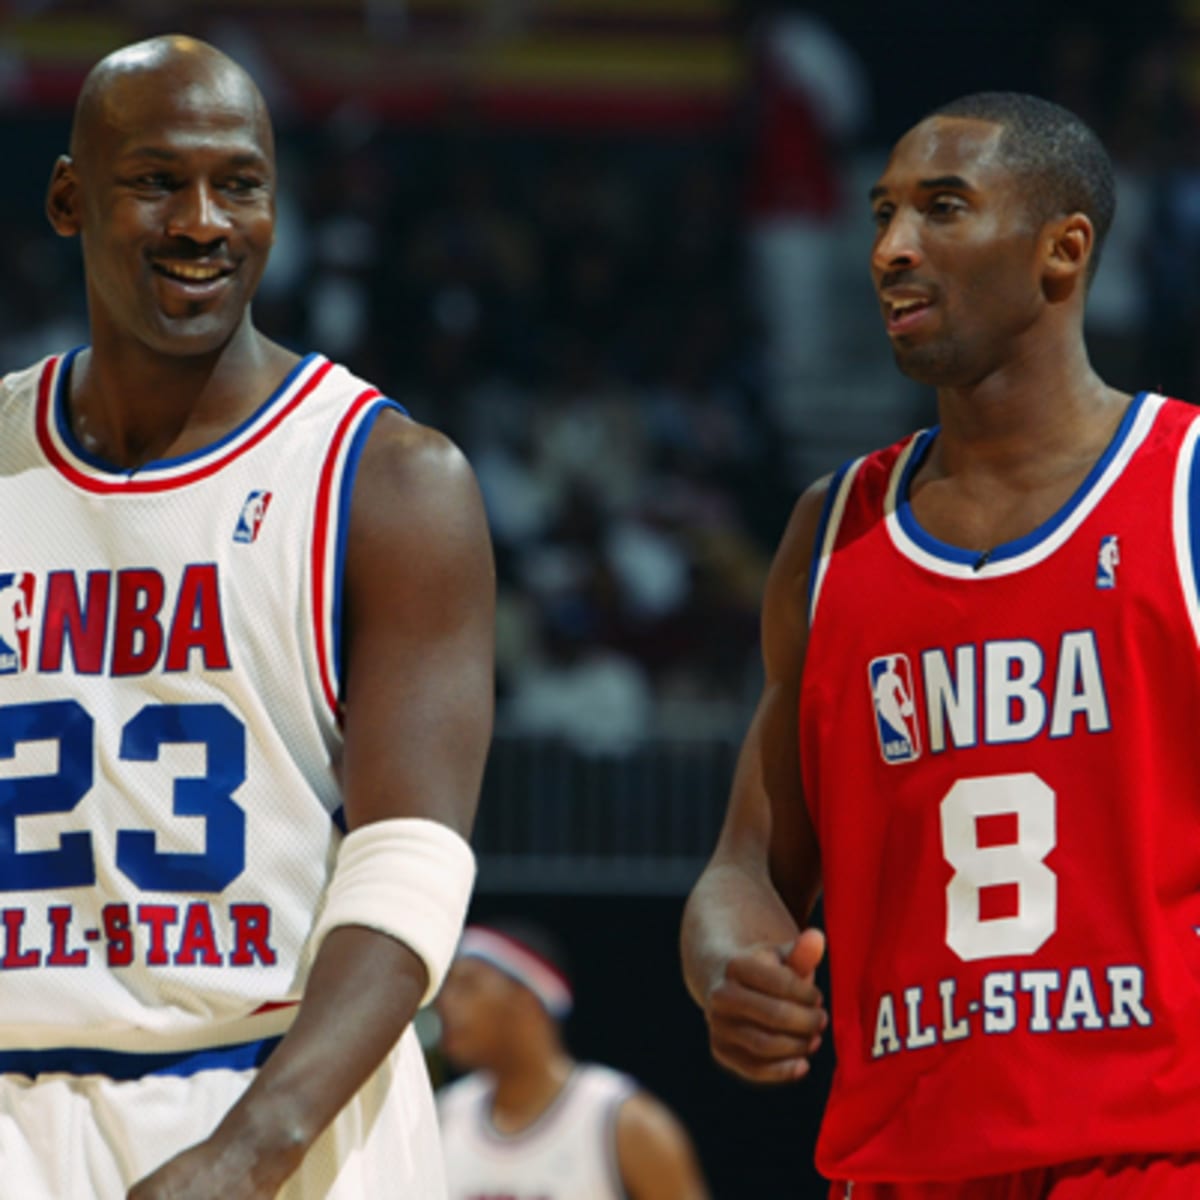 I am better than you, Michael Jordan”: Kobe Bryant's no. 24 jersey